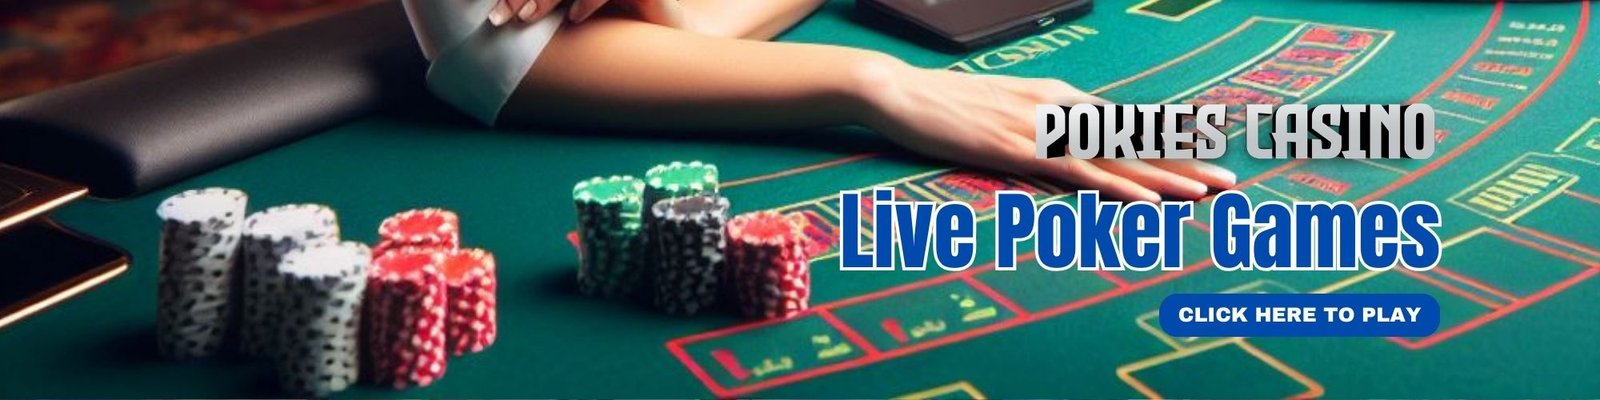 Live Poker Games